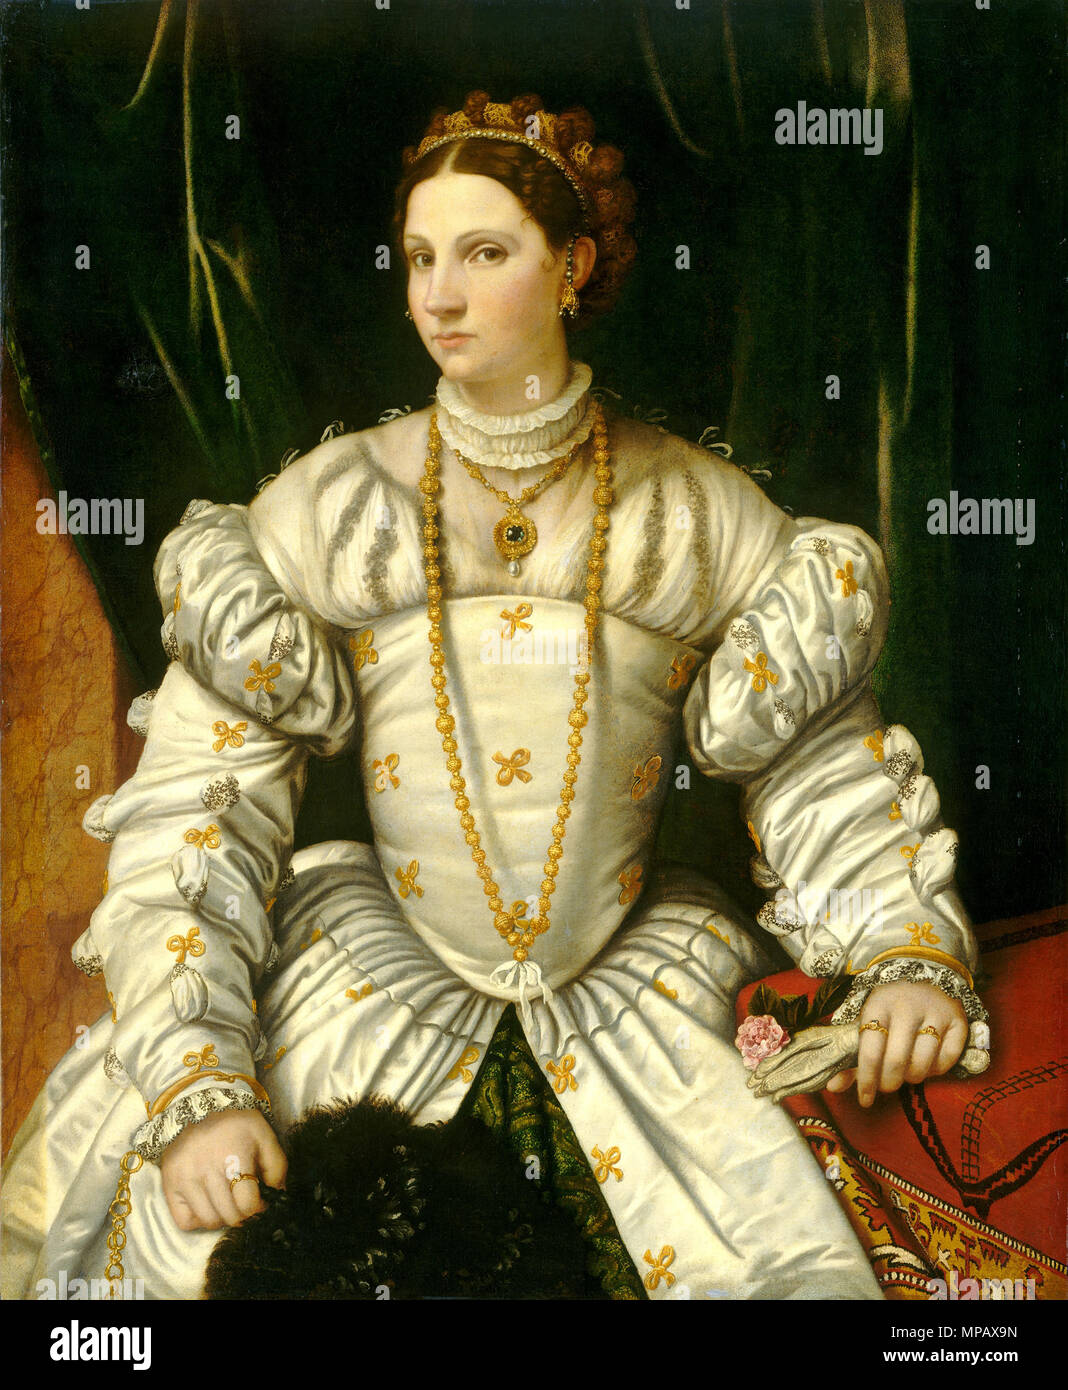 Painting; oil on canvas; overall: 106.4 x 87.6 cm (41 7/8 x 34 1/2 in.) framed: 142.2 x 115.9 x 8.6 cm (56 x 45 5/8 x 3 3/8 in.);   Portrait of a Lady in White   circa 1540.   905 Moretto da Brescia 007 Stock Photo